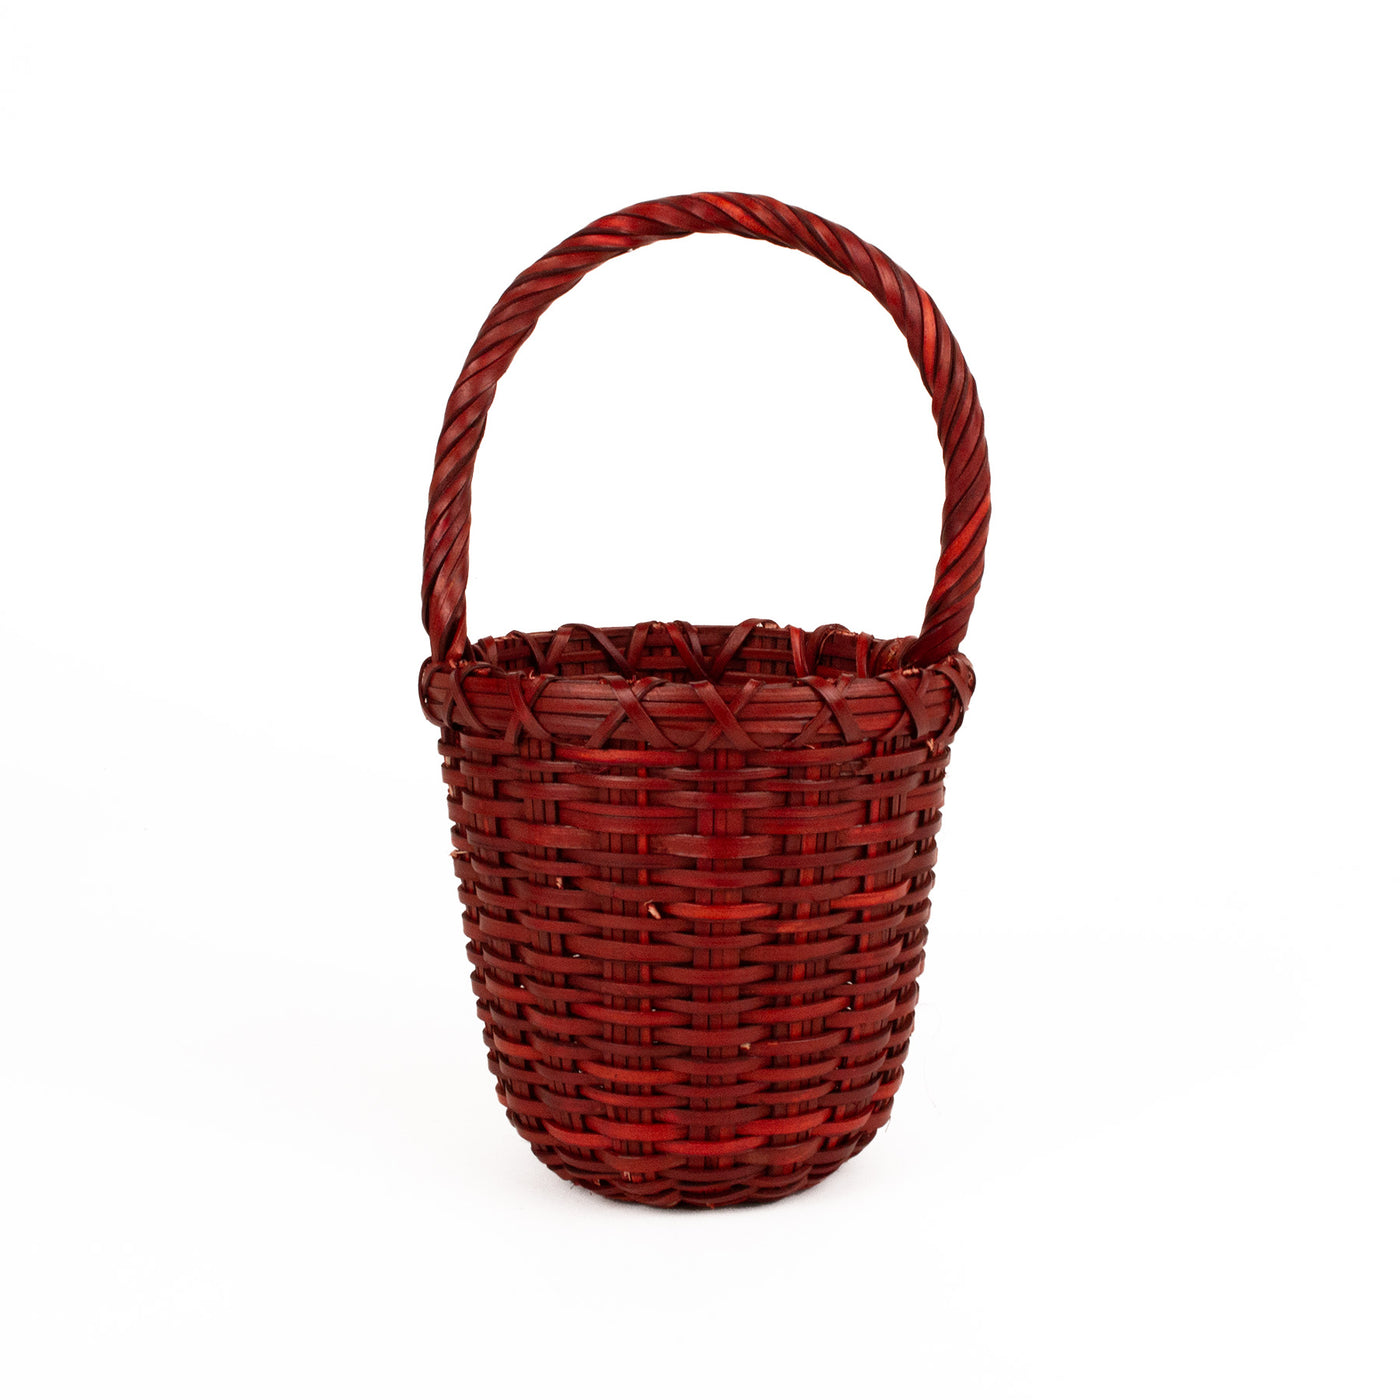 Cherished Handbag - Red Fan Palm